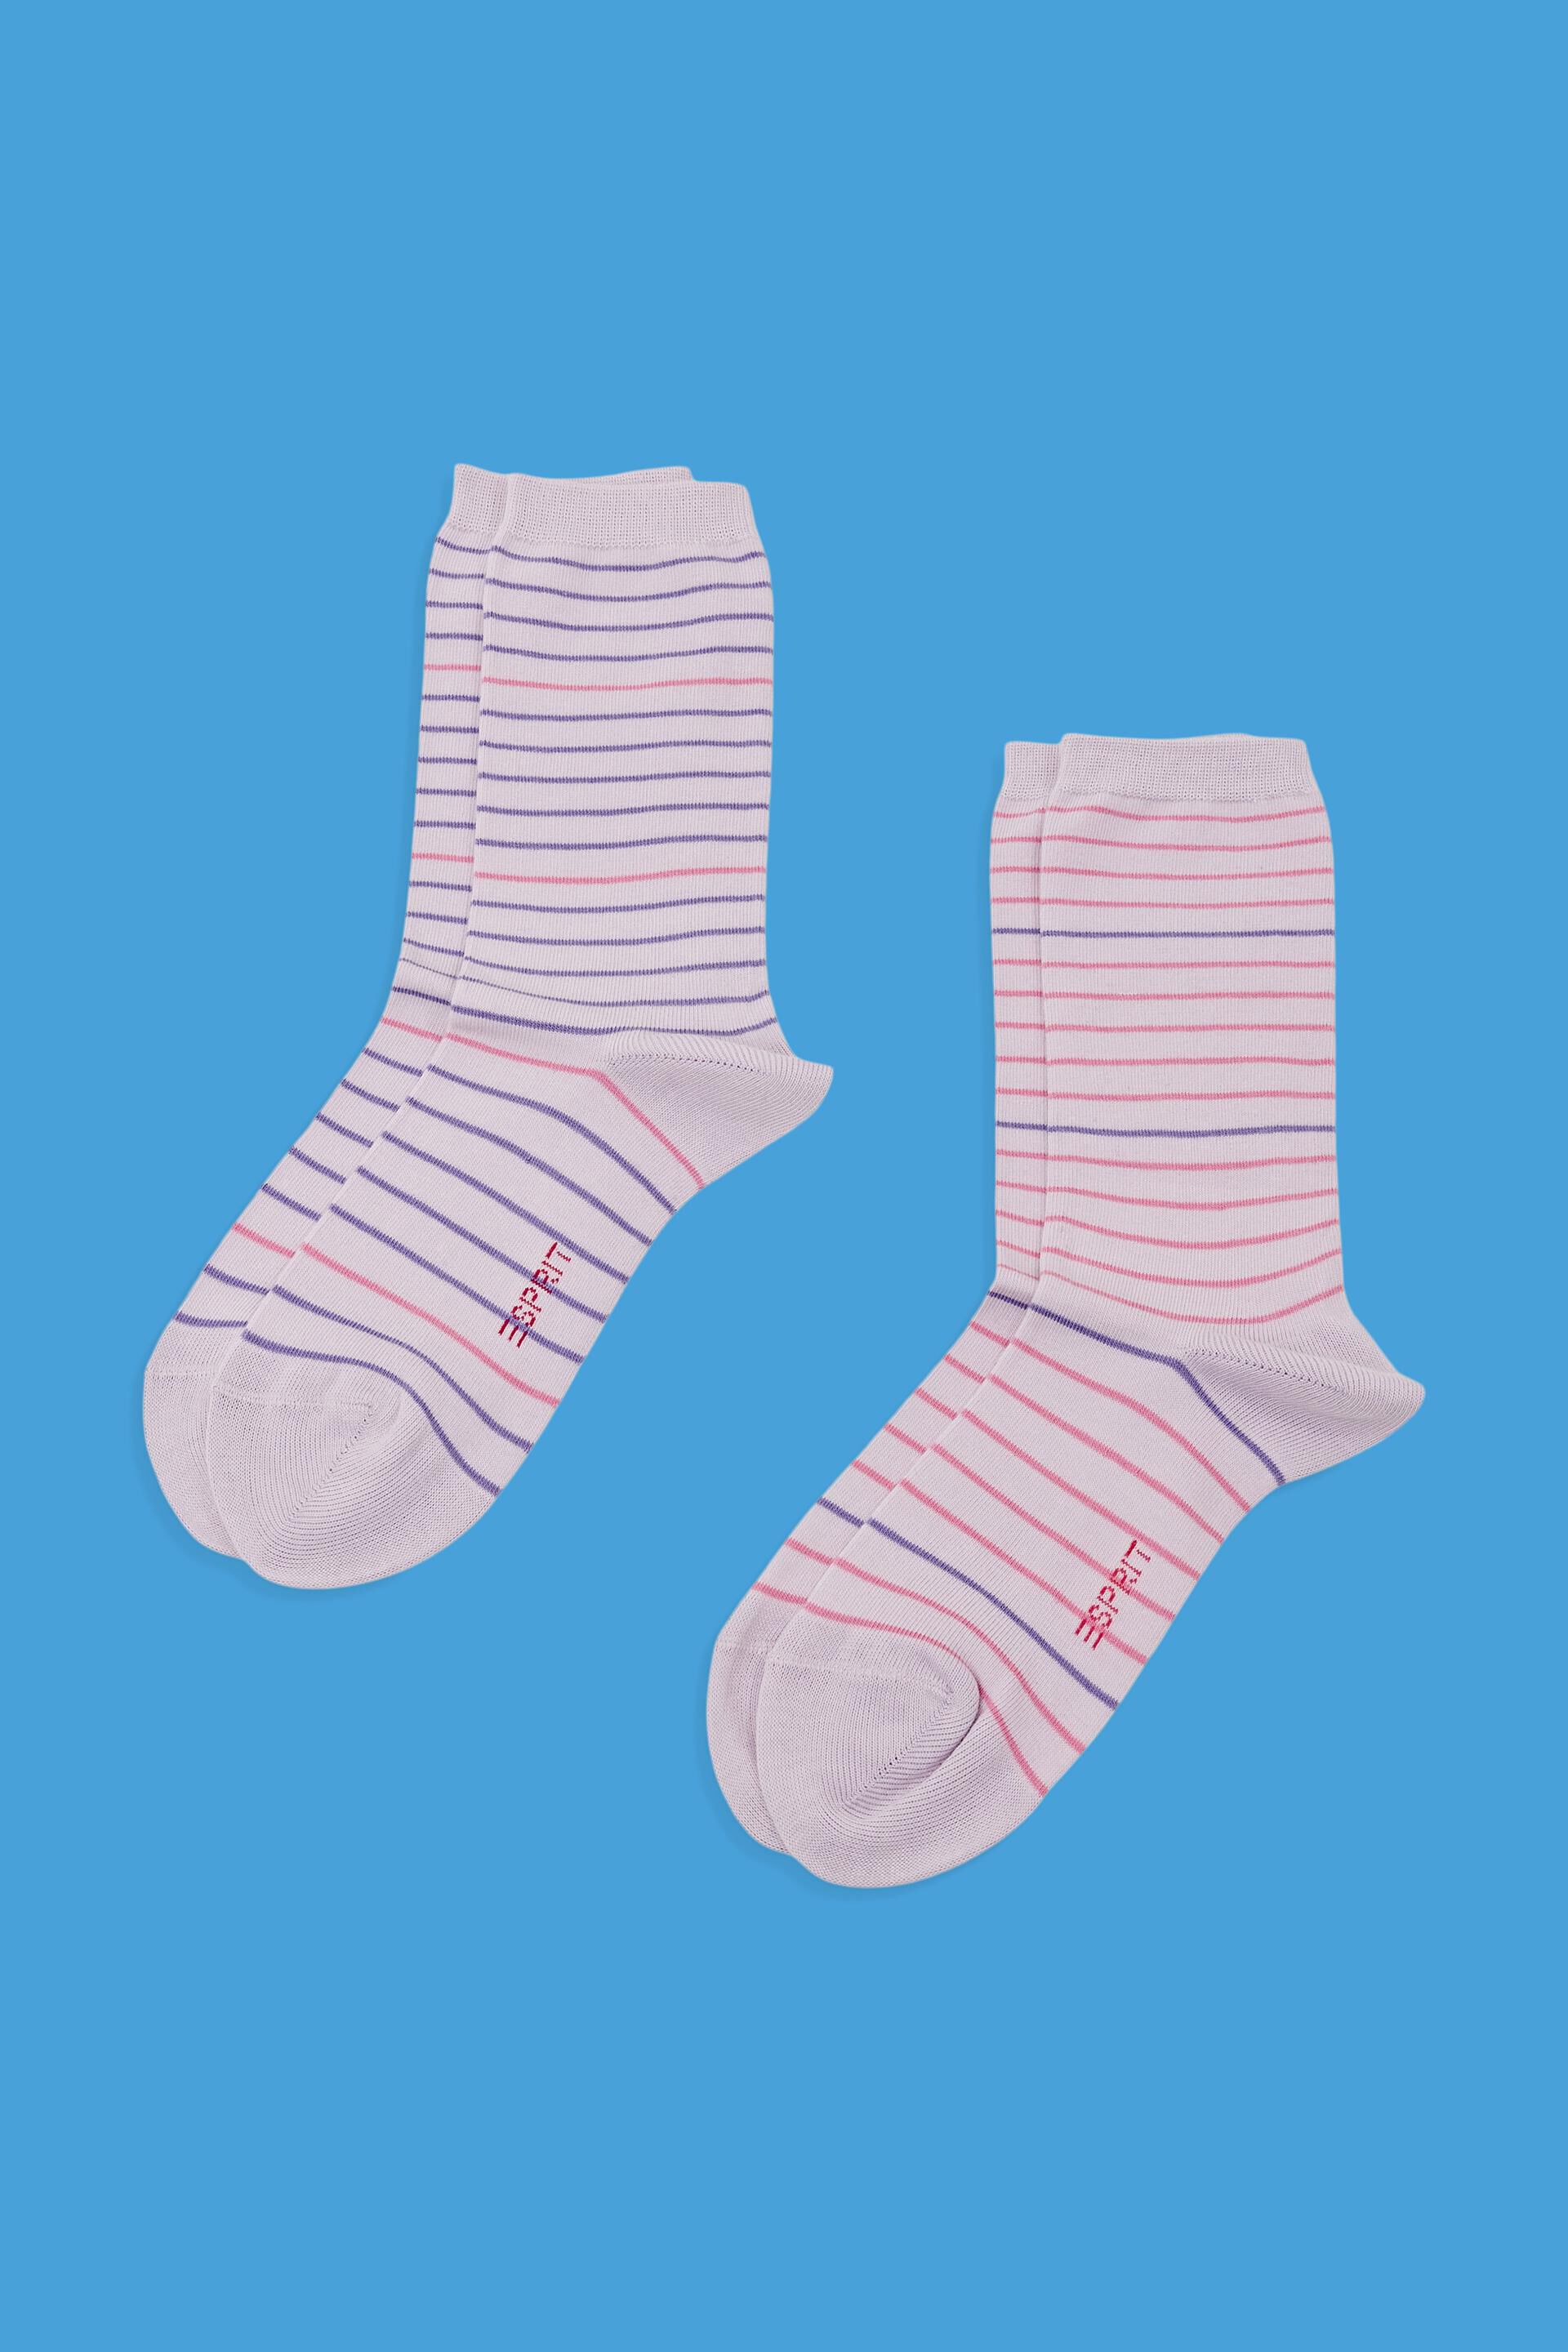 Esprit Online Store 2-pack of striped socks, organic cotton